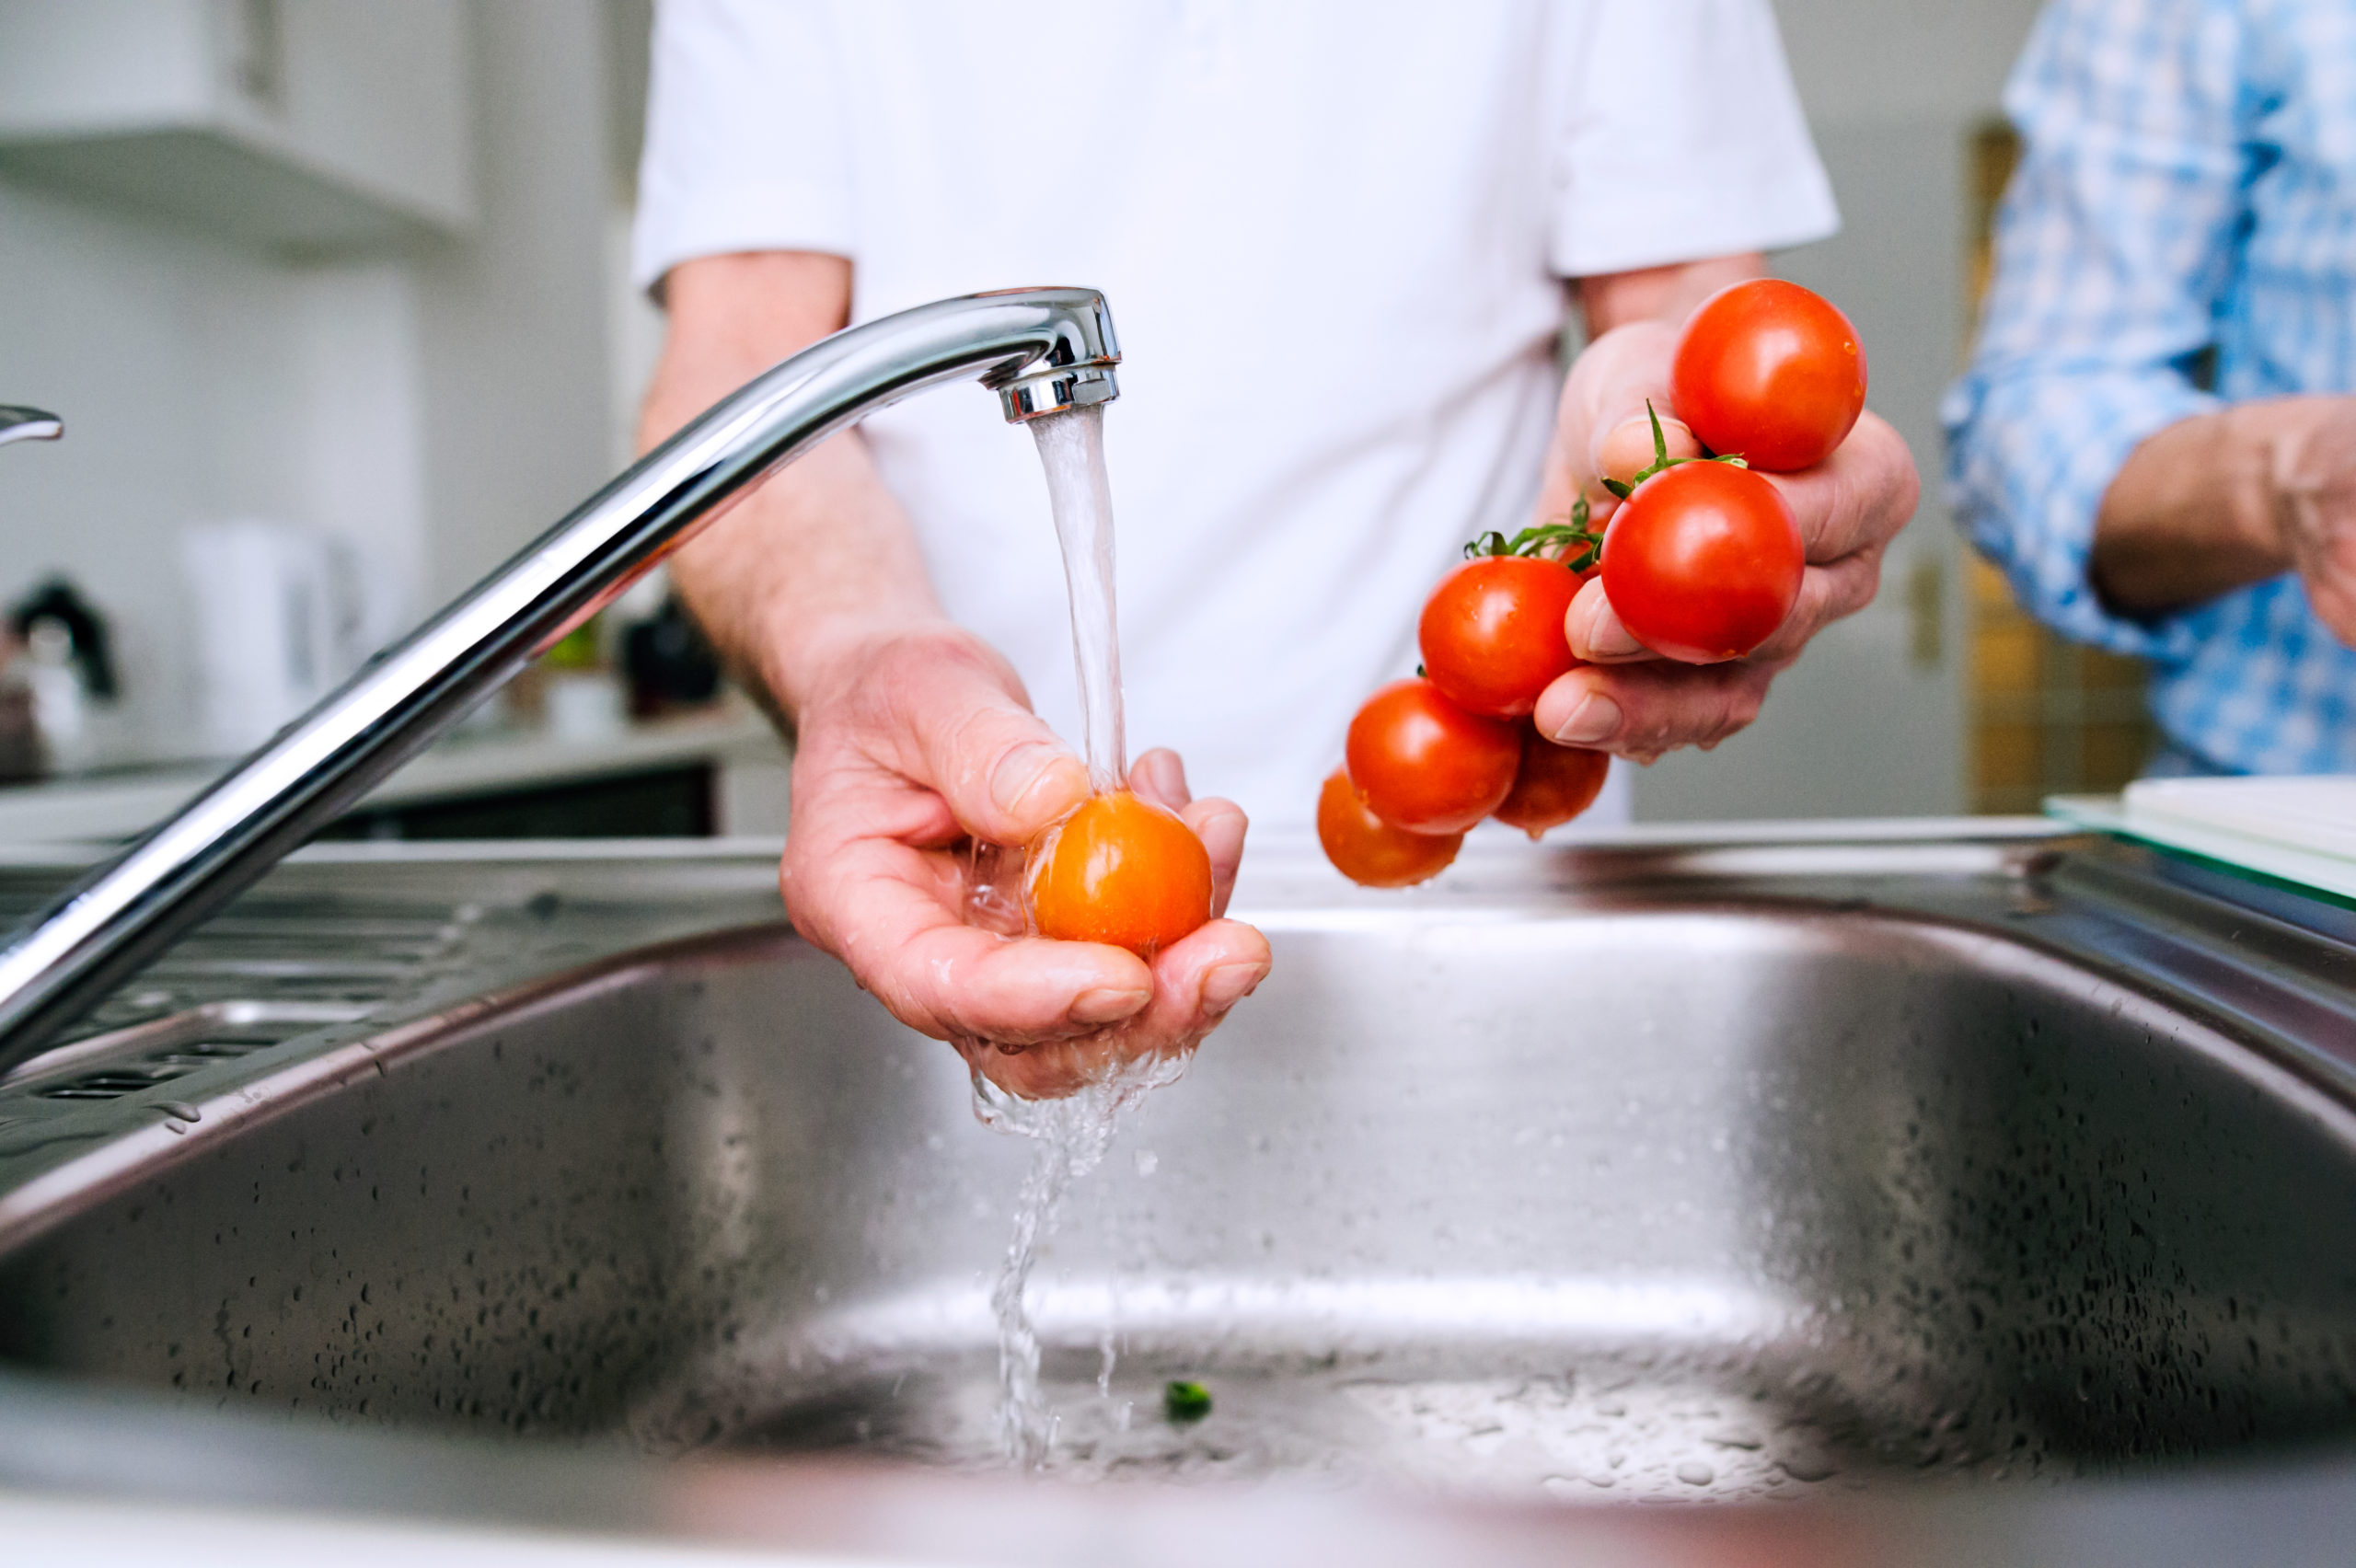 washing tomatoes